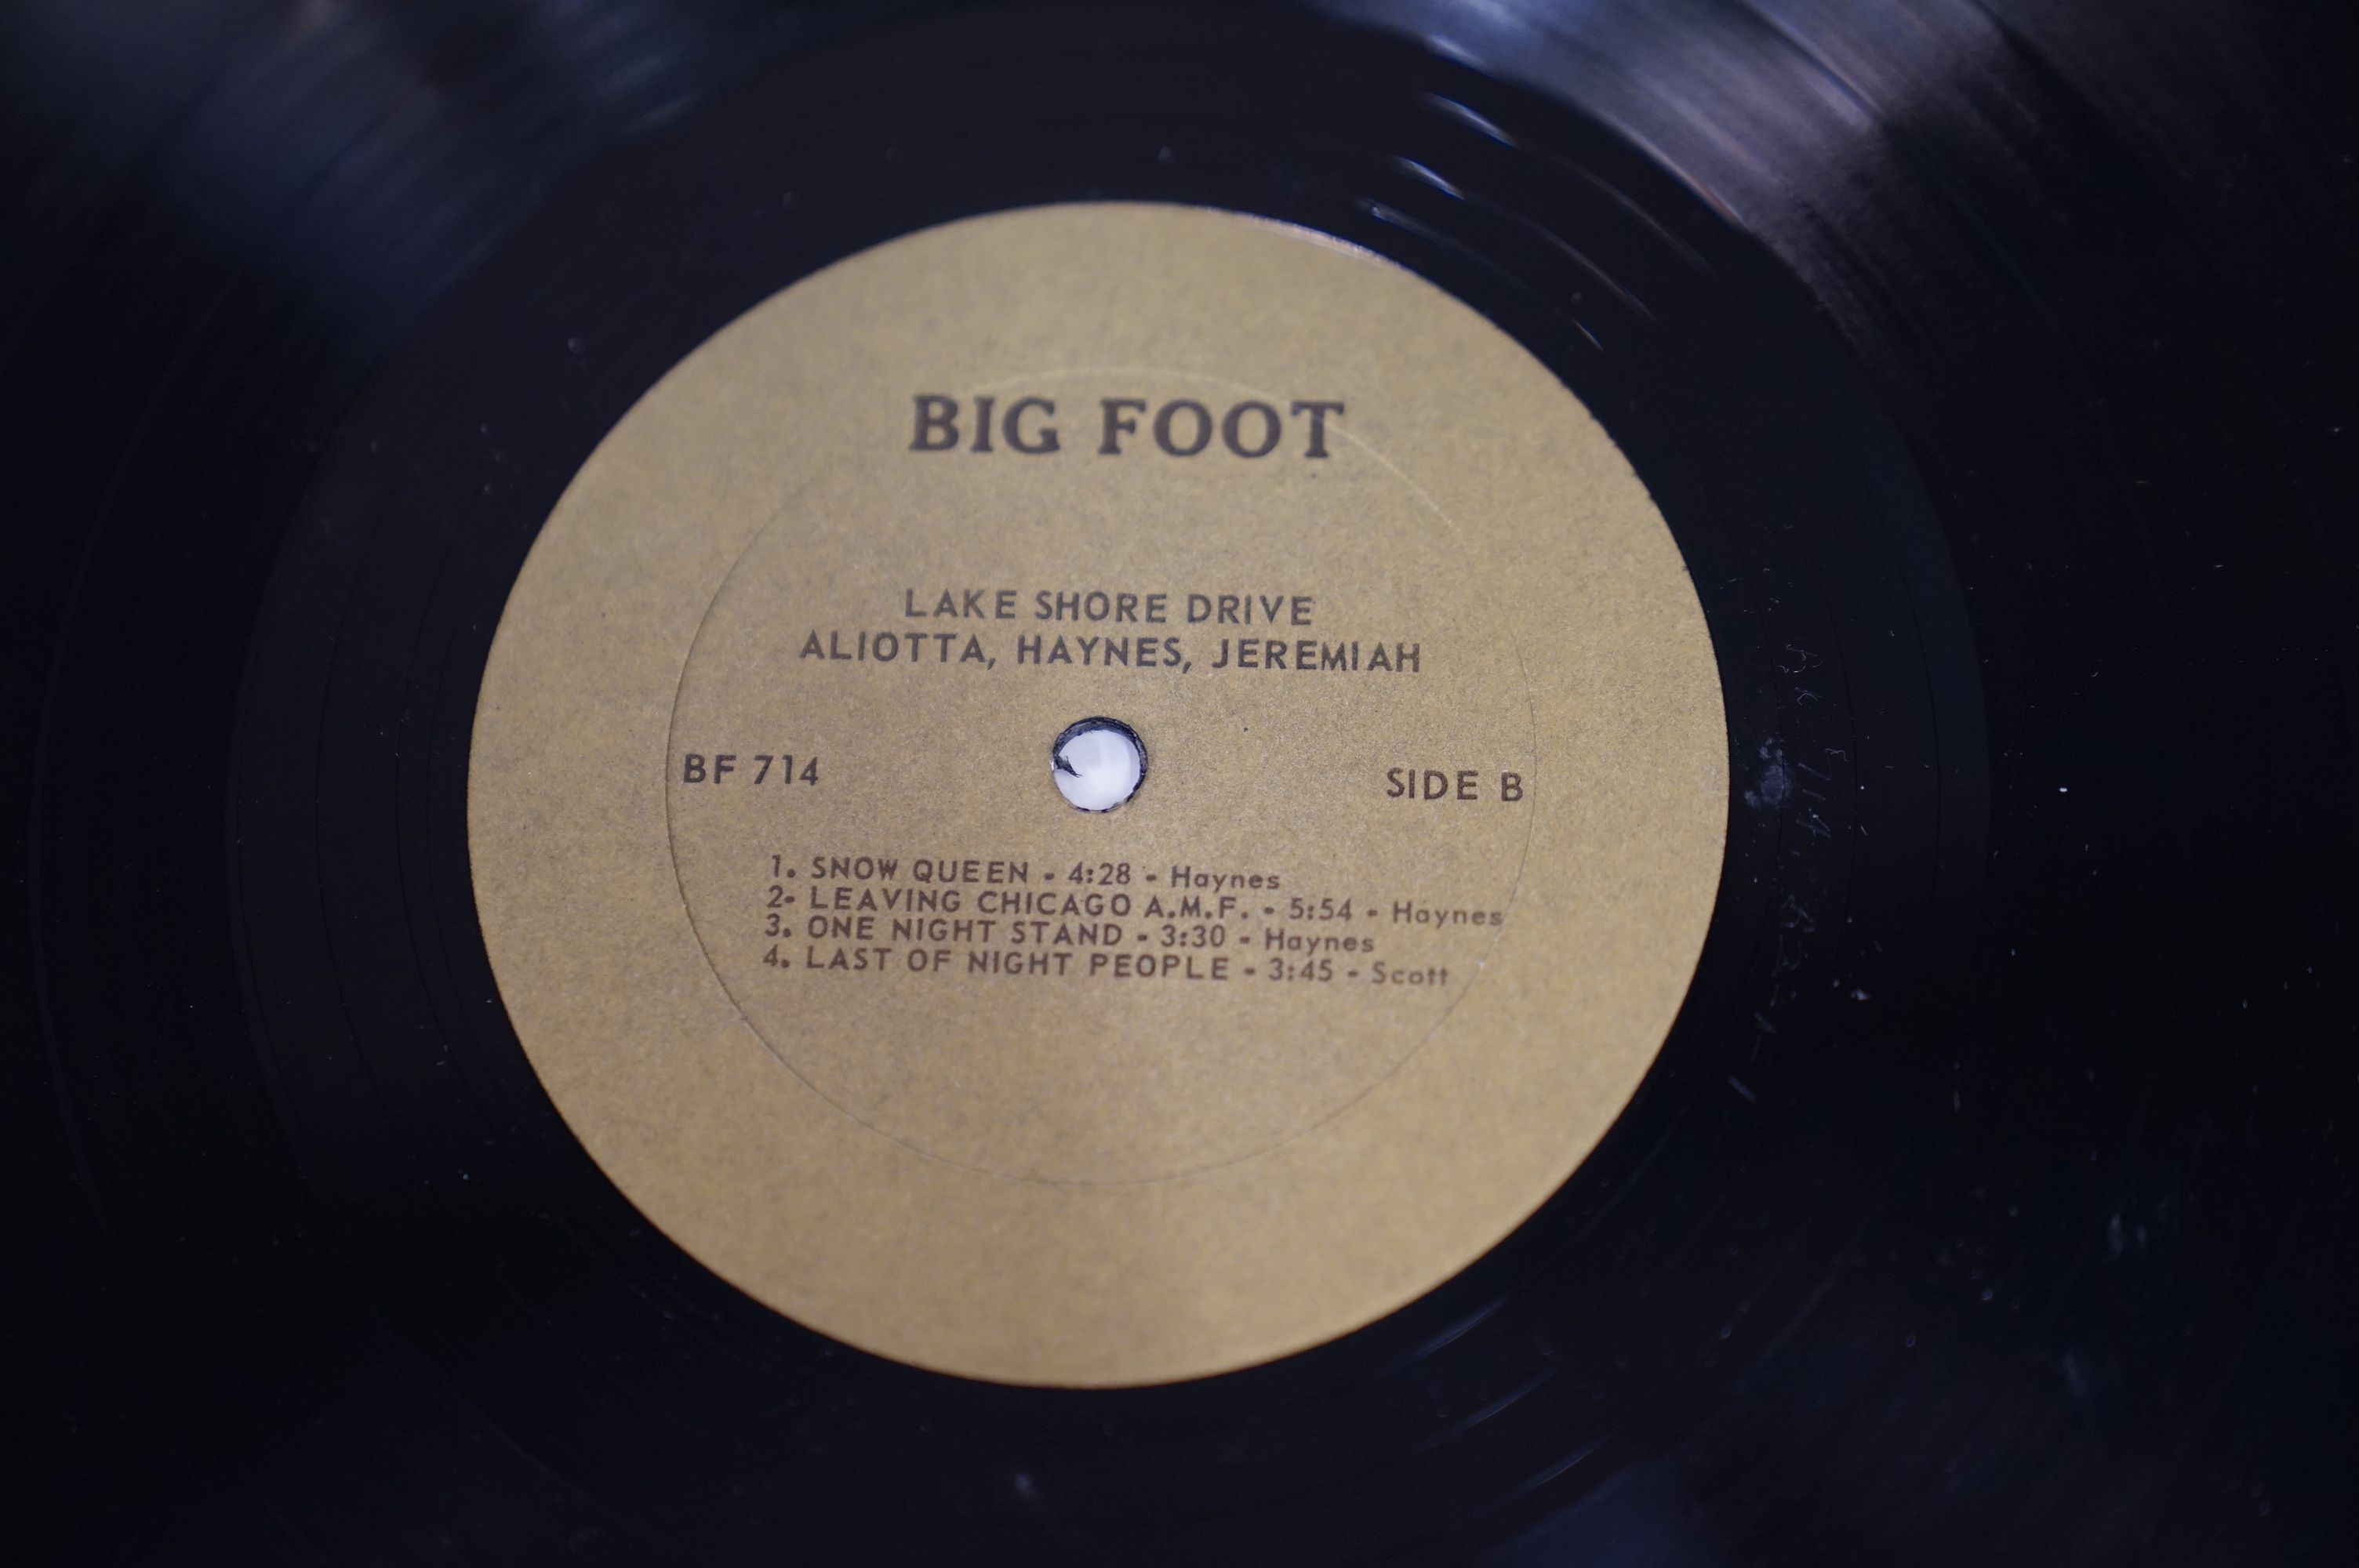 VINYL - ALIOTTA, HAYNES, JEREMIAH - "LAKE SHORE DRIVE", 1971 US PRESSING BIG FOOT RECORDS, BF 714. - Image 6 of 7